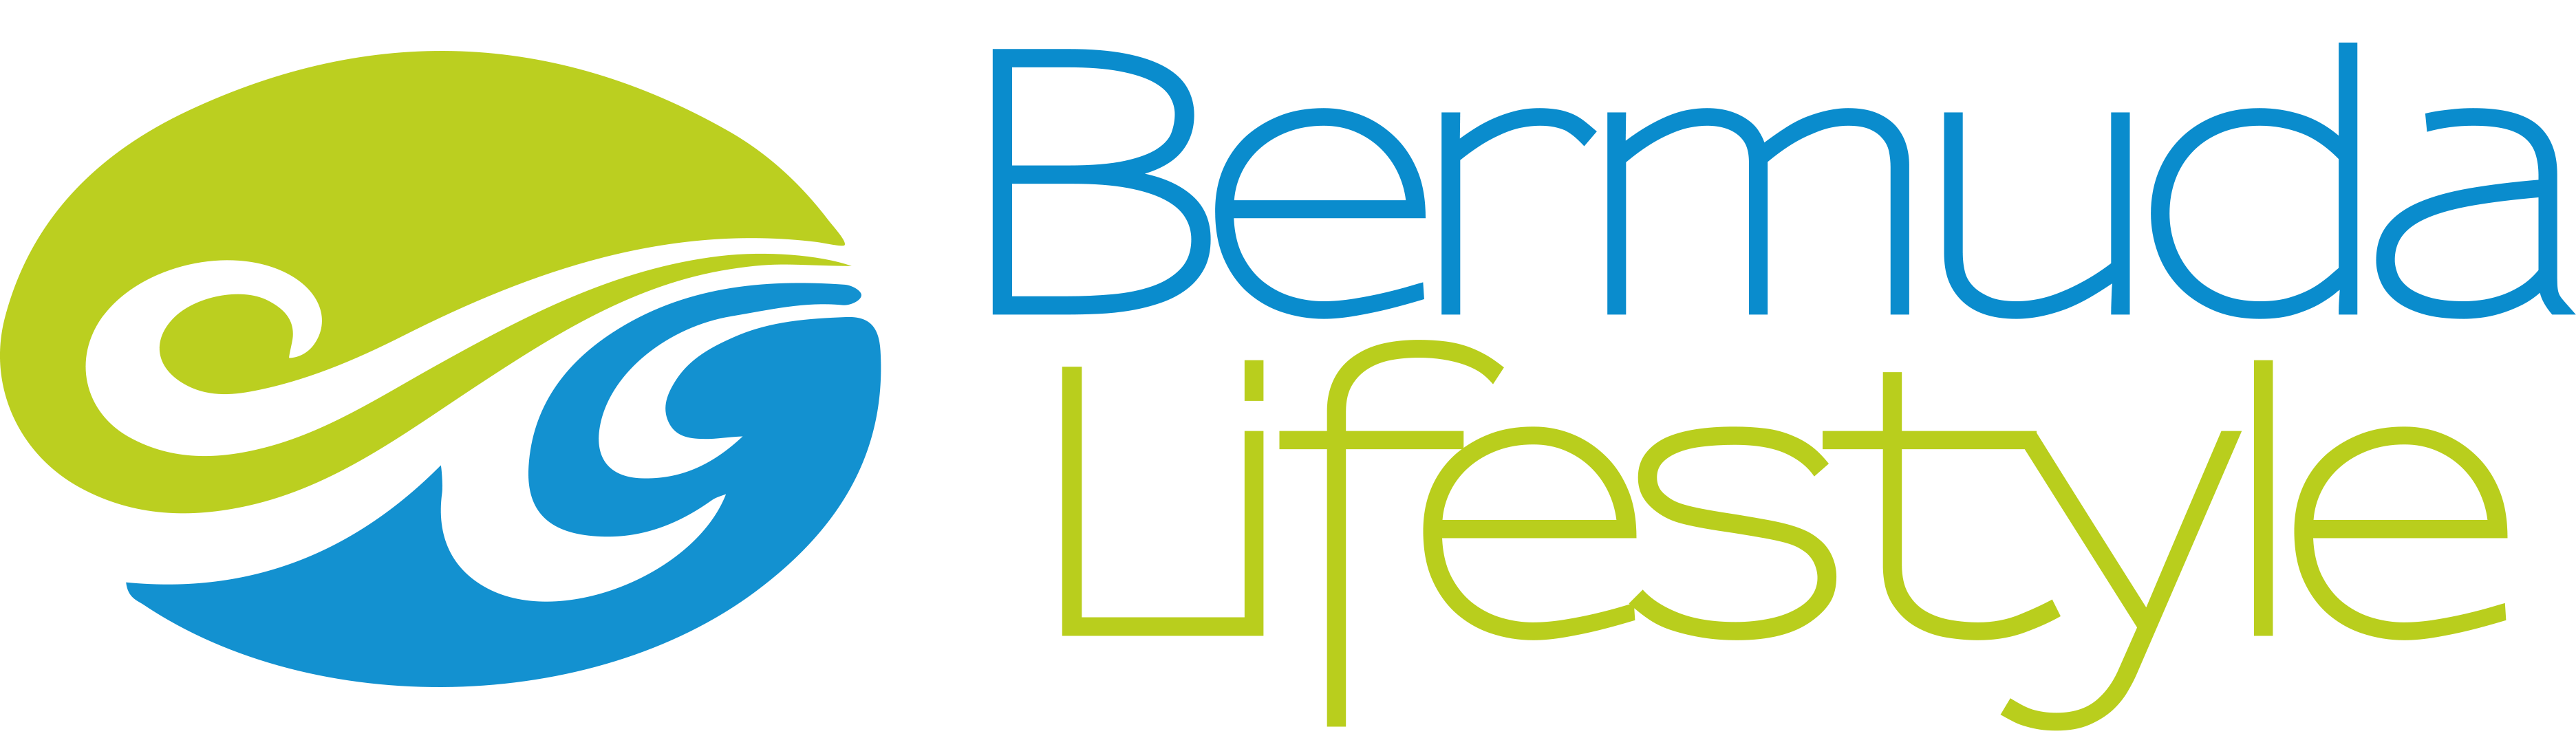 Bermuda Lifestyle logo